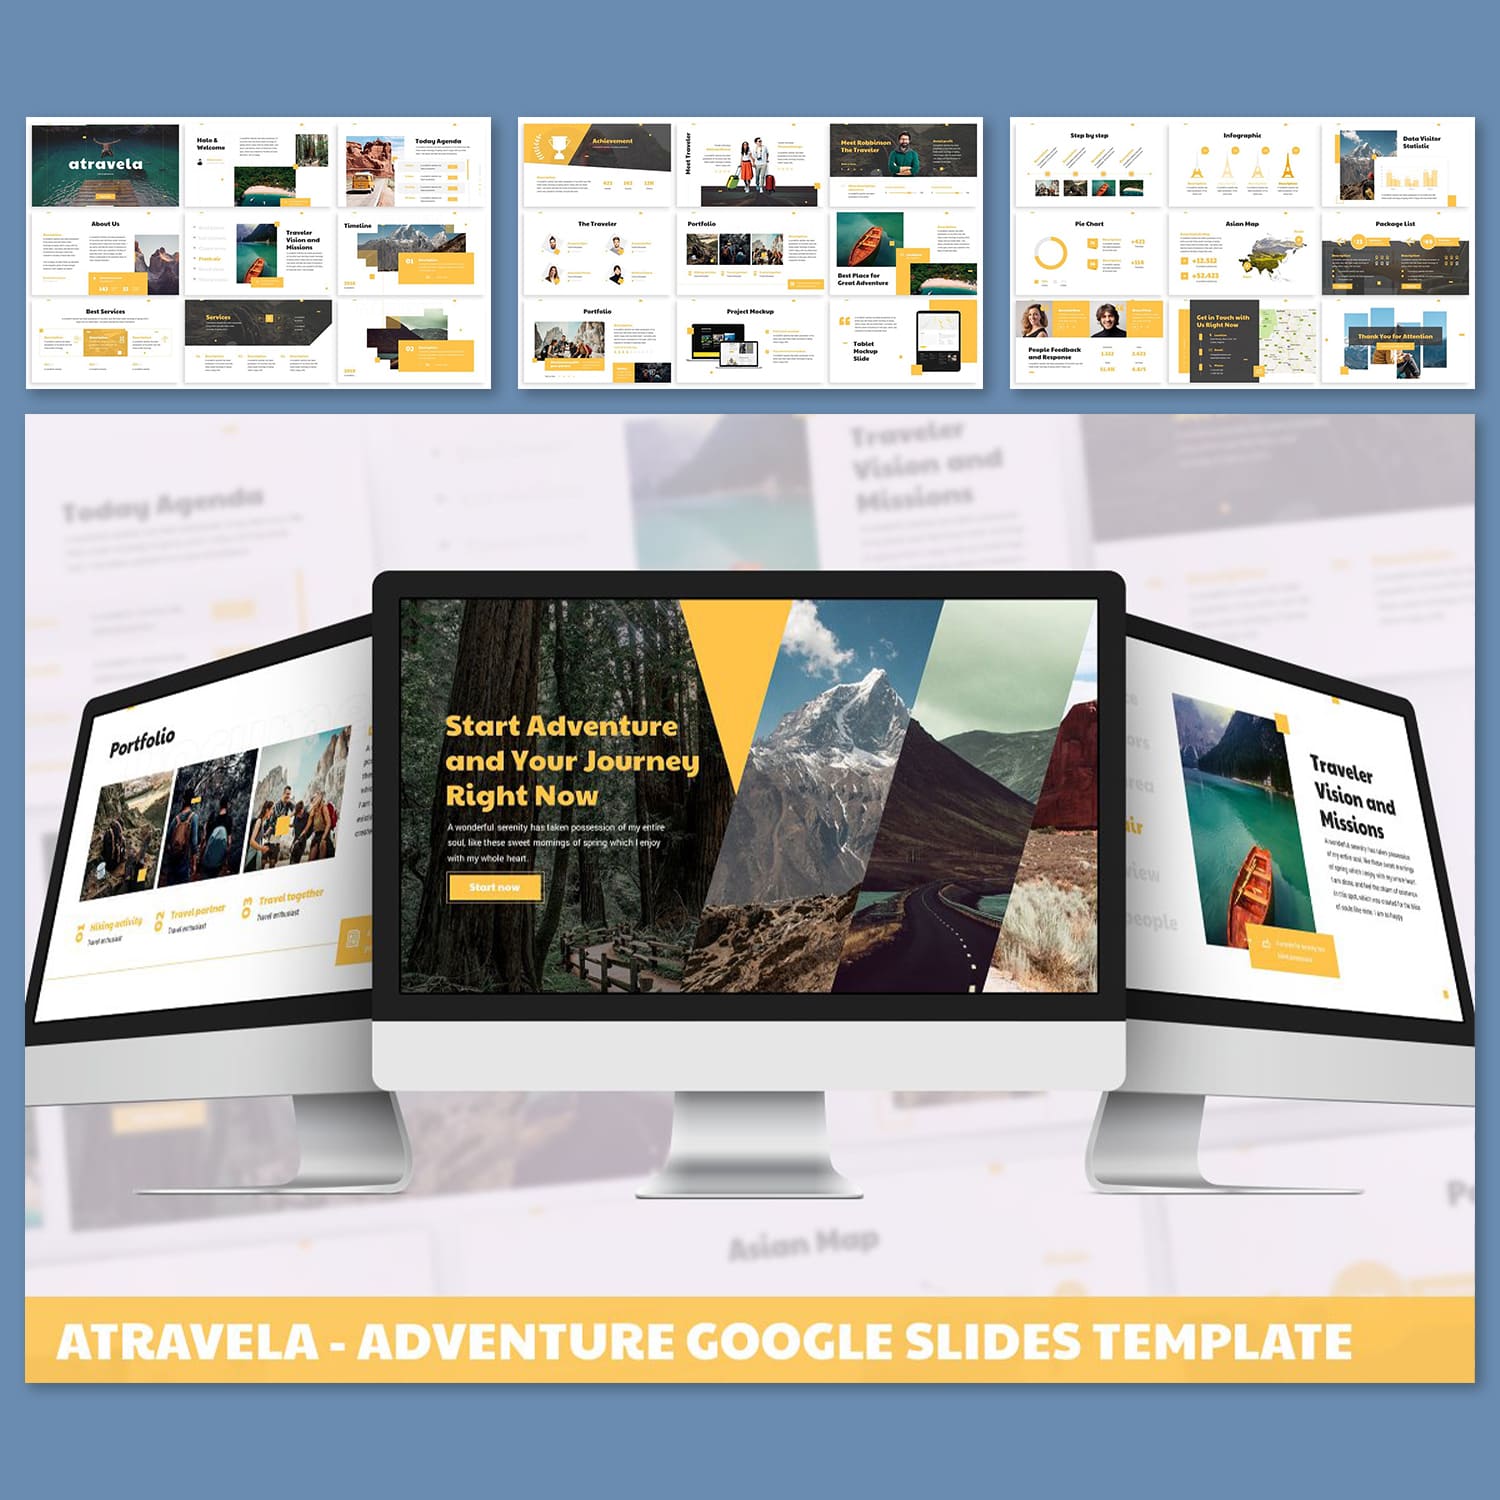 Atravela - Adventure Google Slides Template main cover.